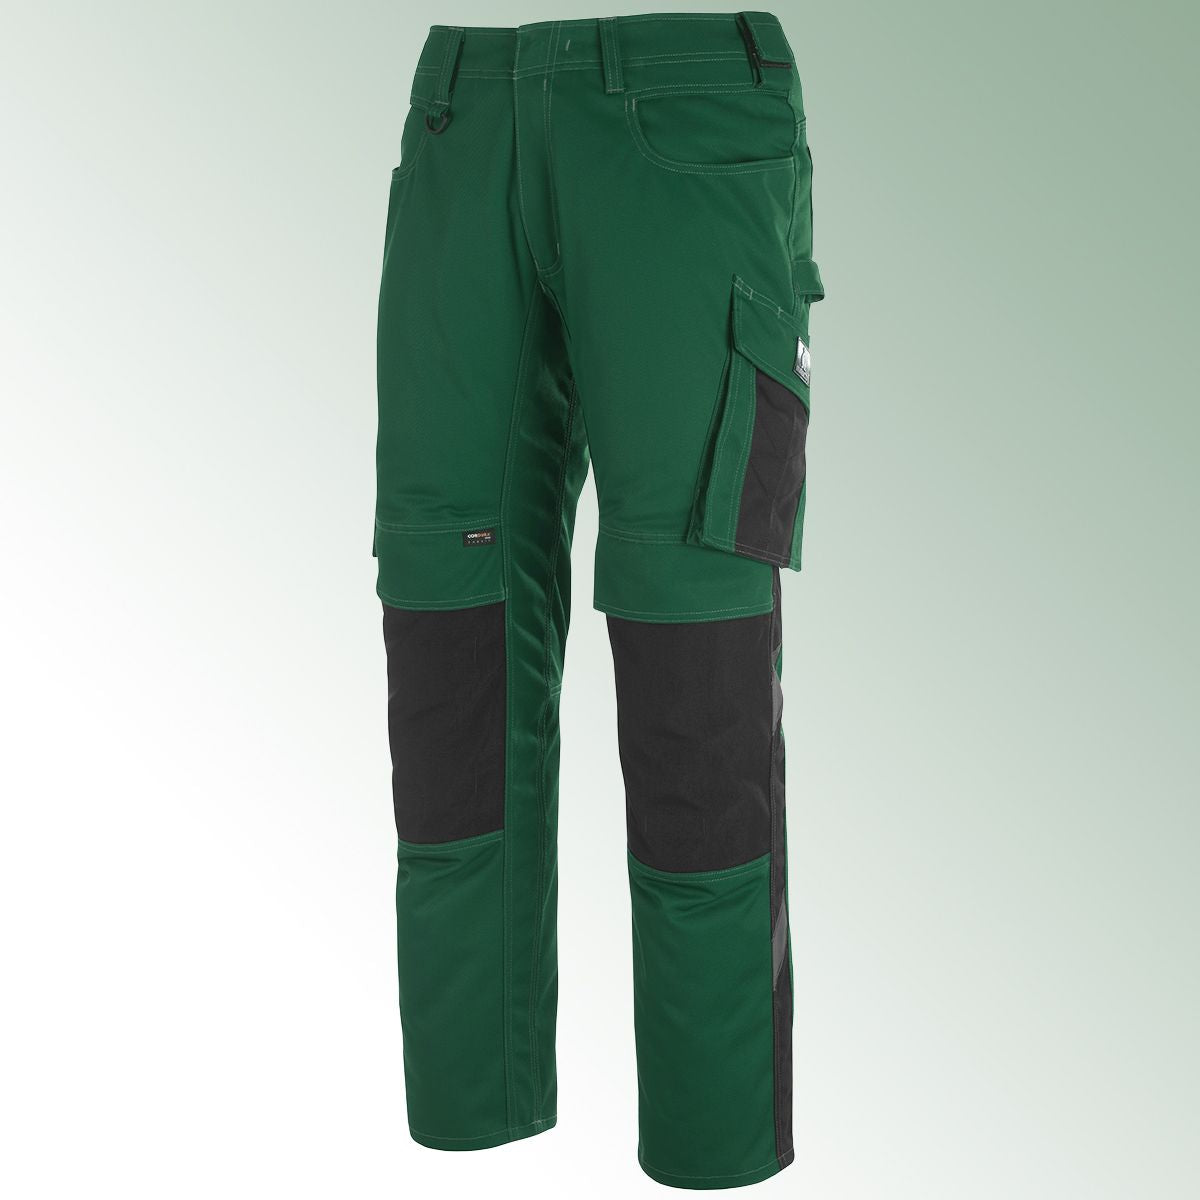 Trousers Mannheim Size 48 Green / Black